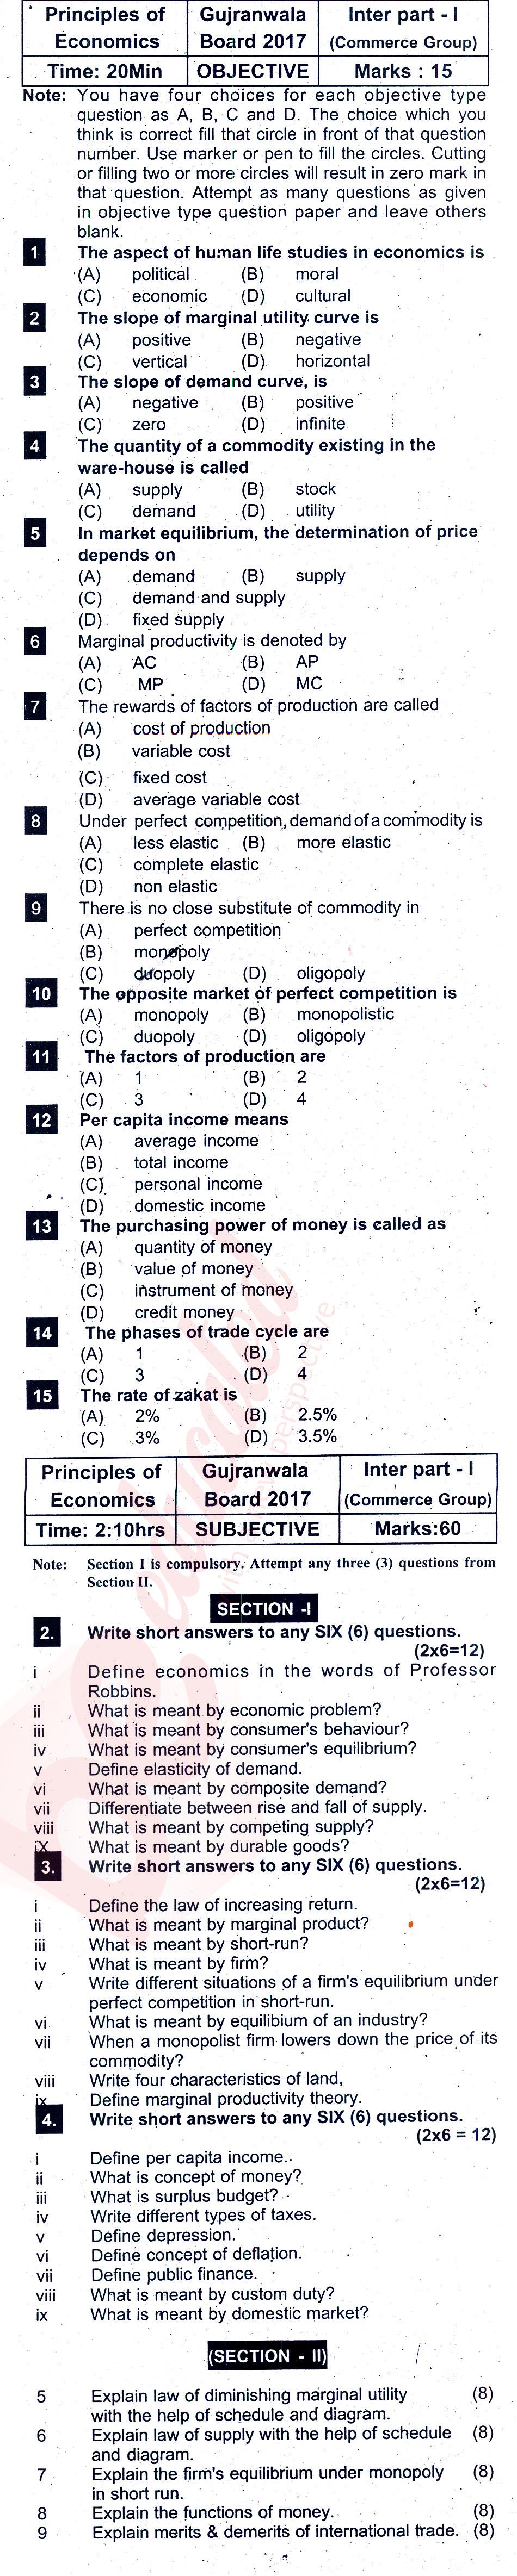 Principles of Economics ICOM Part 1 Past Paper Group 1 BISE Gujranwala 2017